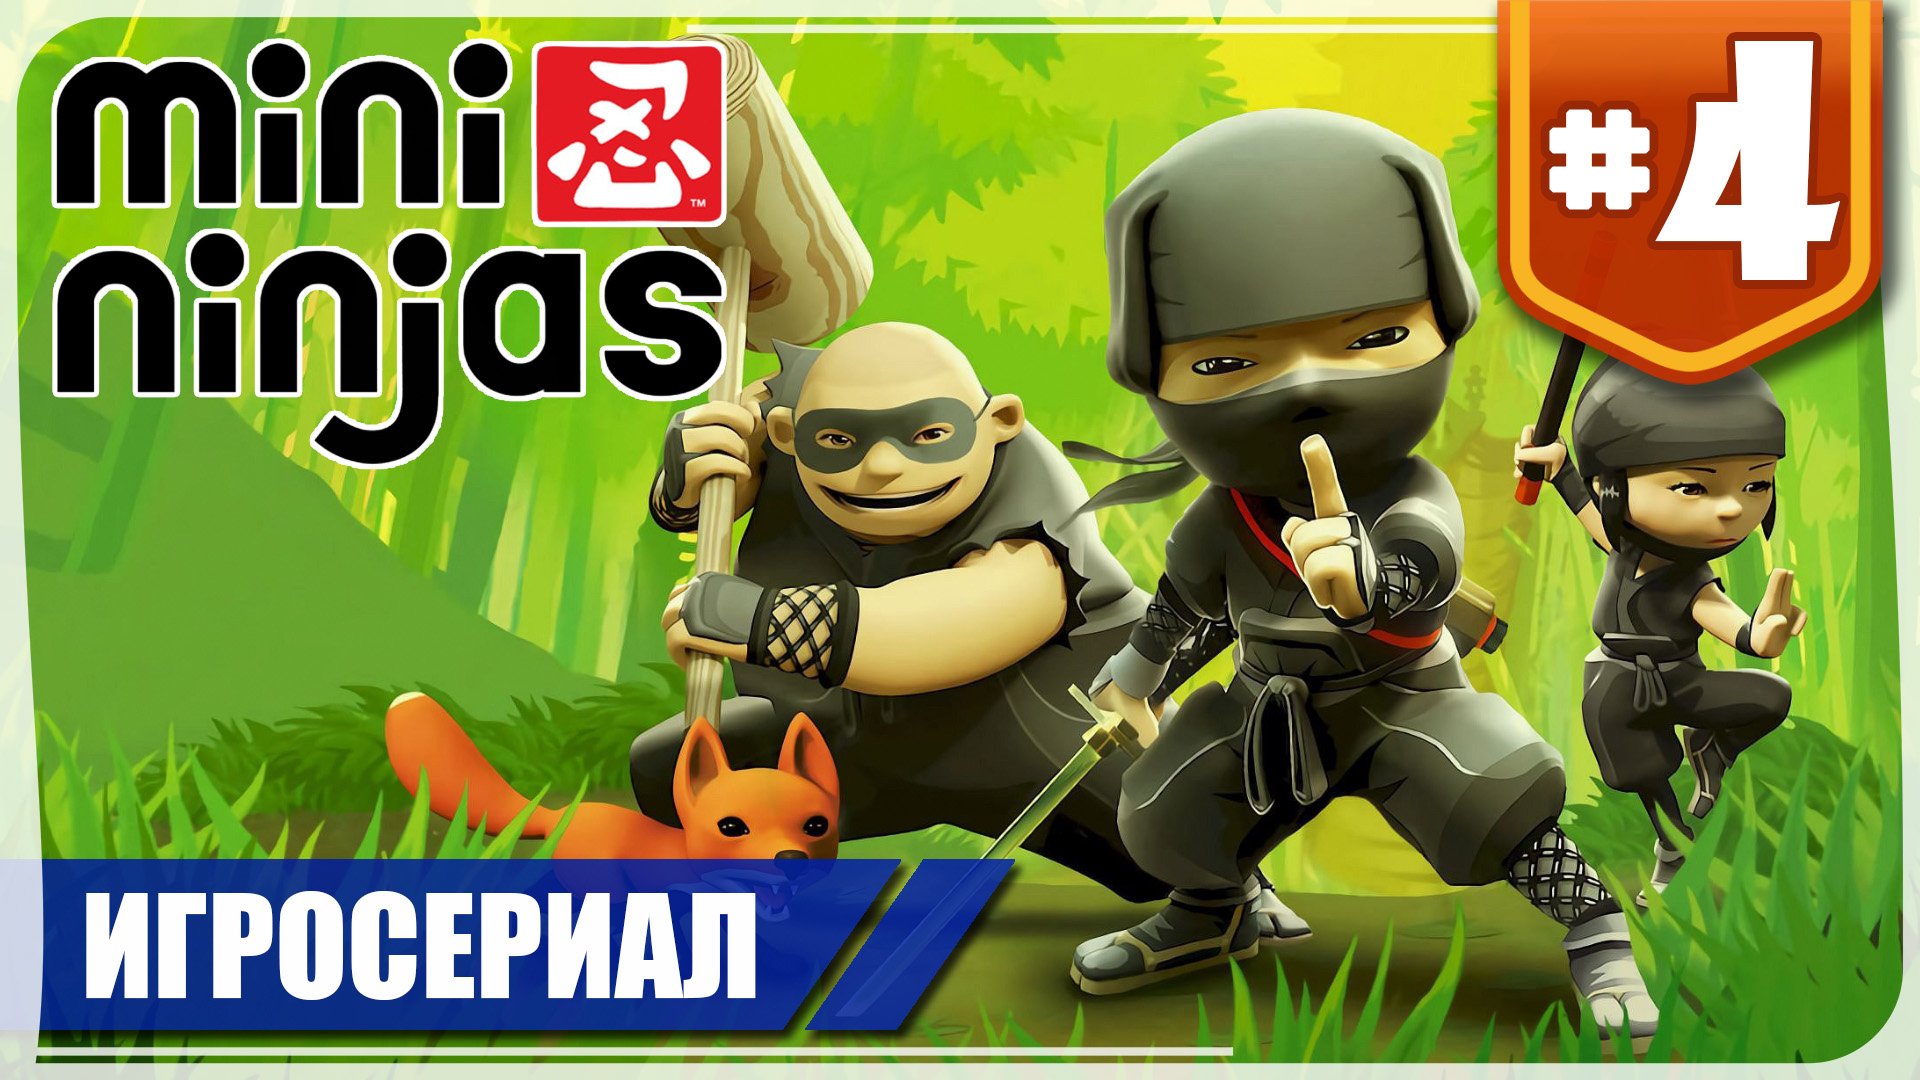 Mini Ninjas #4 ❖ Игросериал